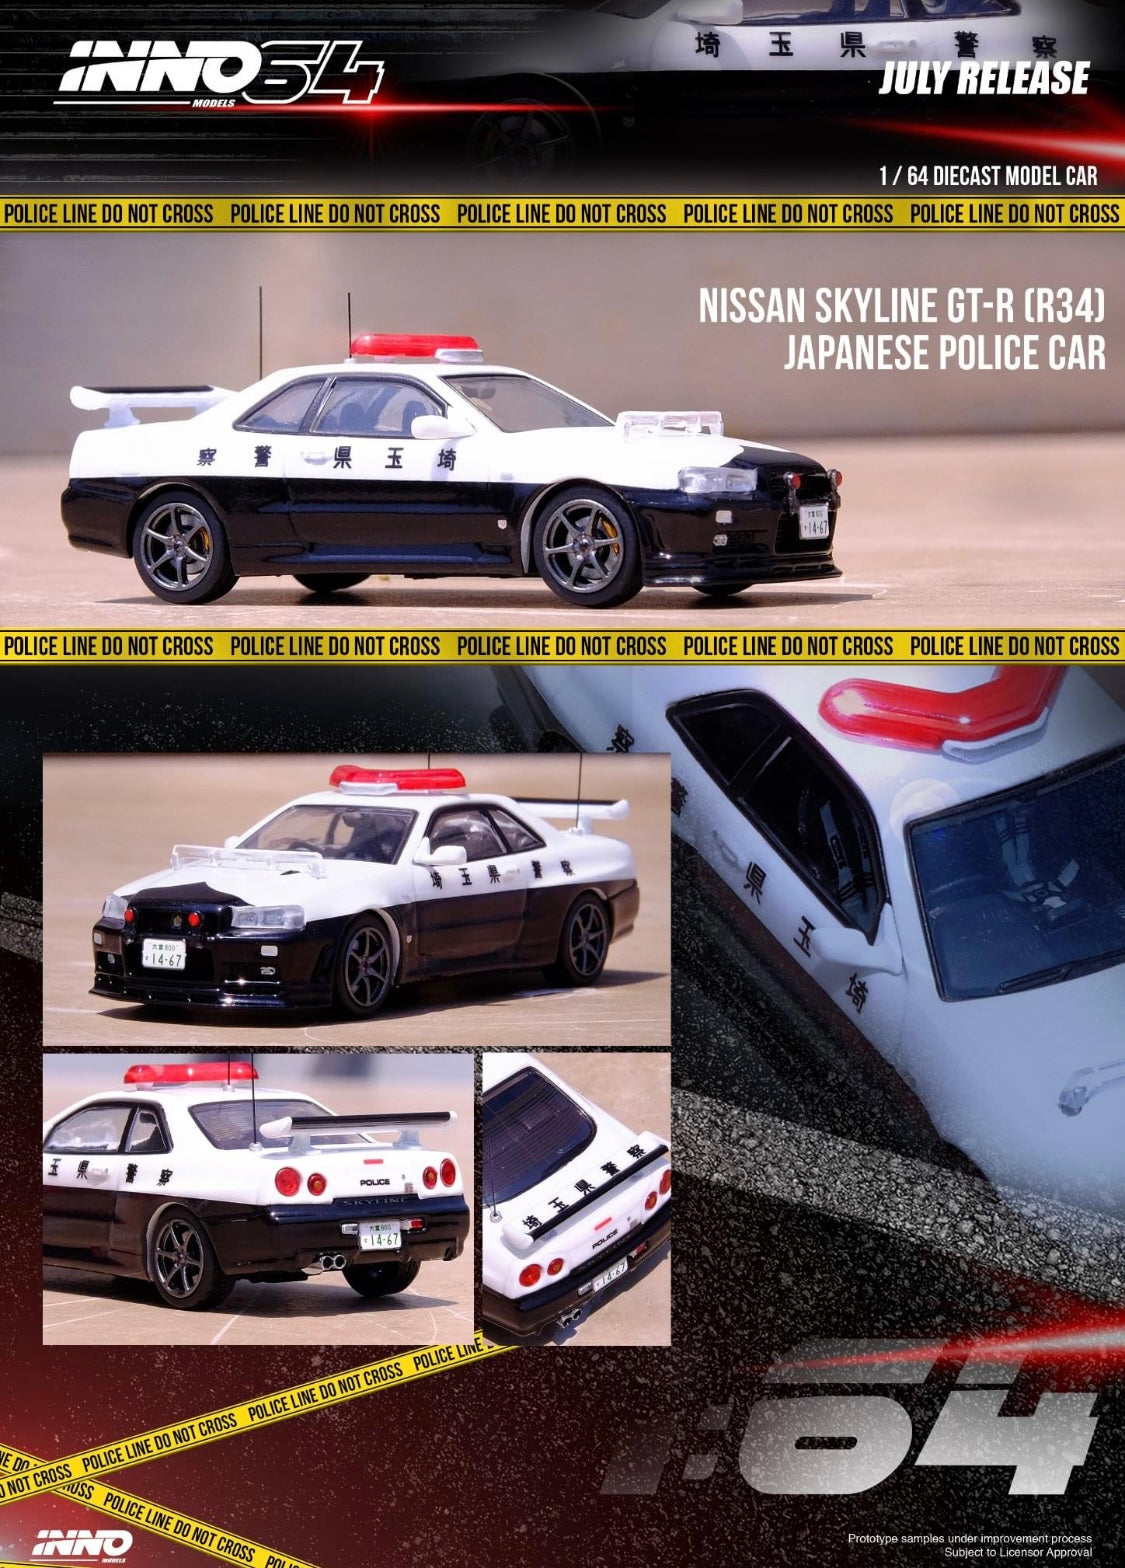 Inno64 Nissan Skyline GT-R (BNR34) Patrol Car inno64